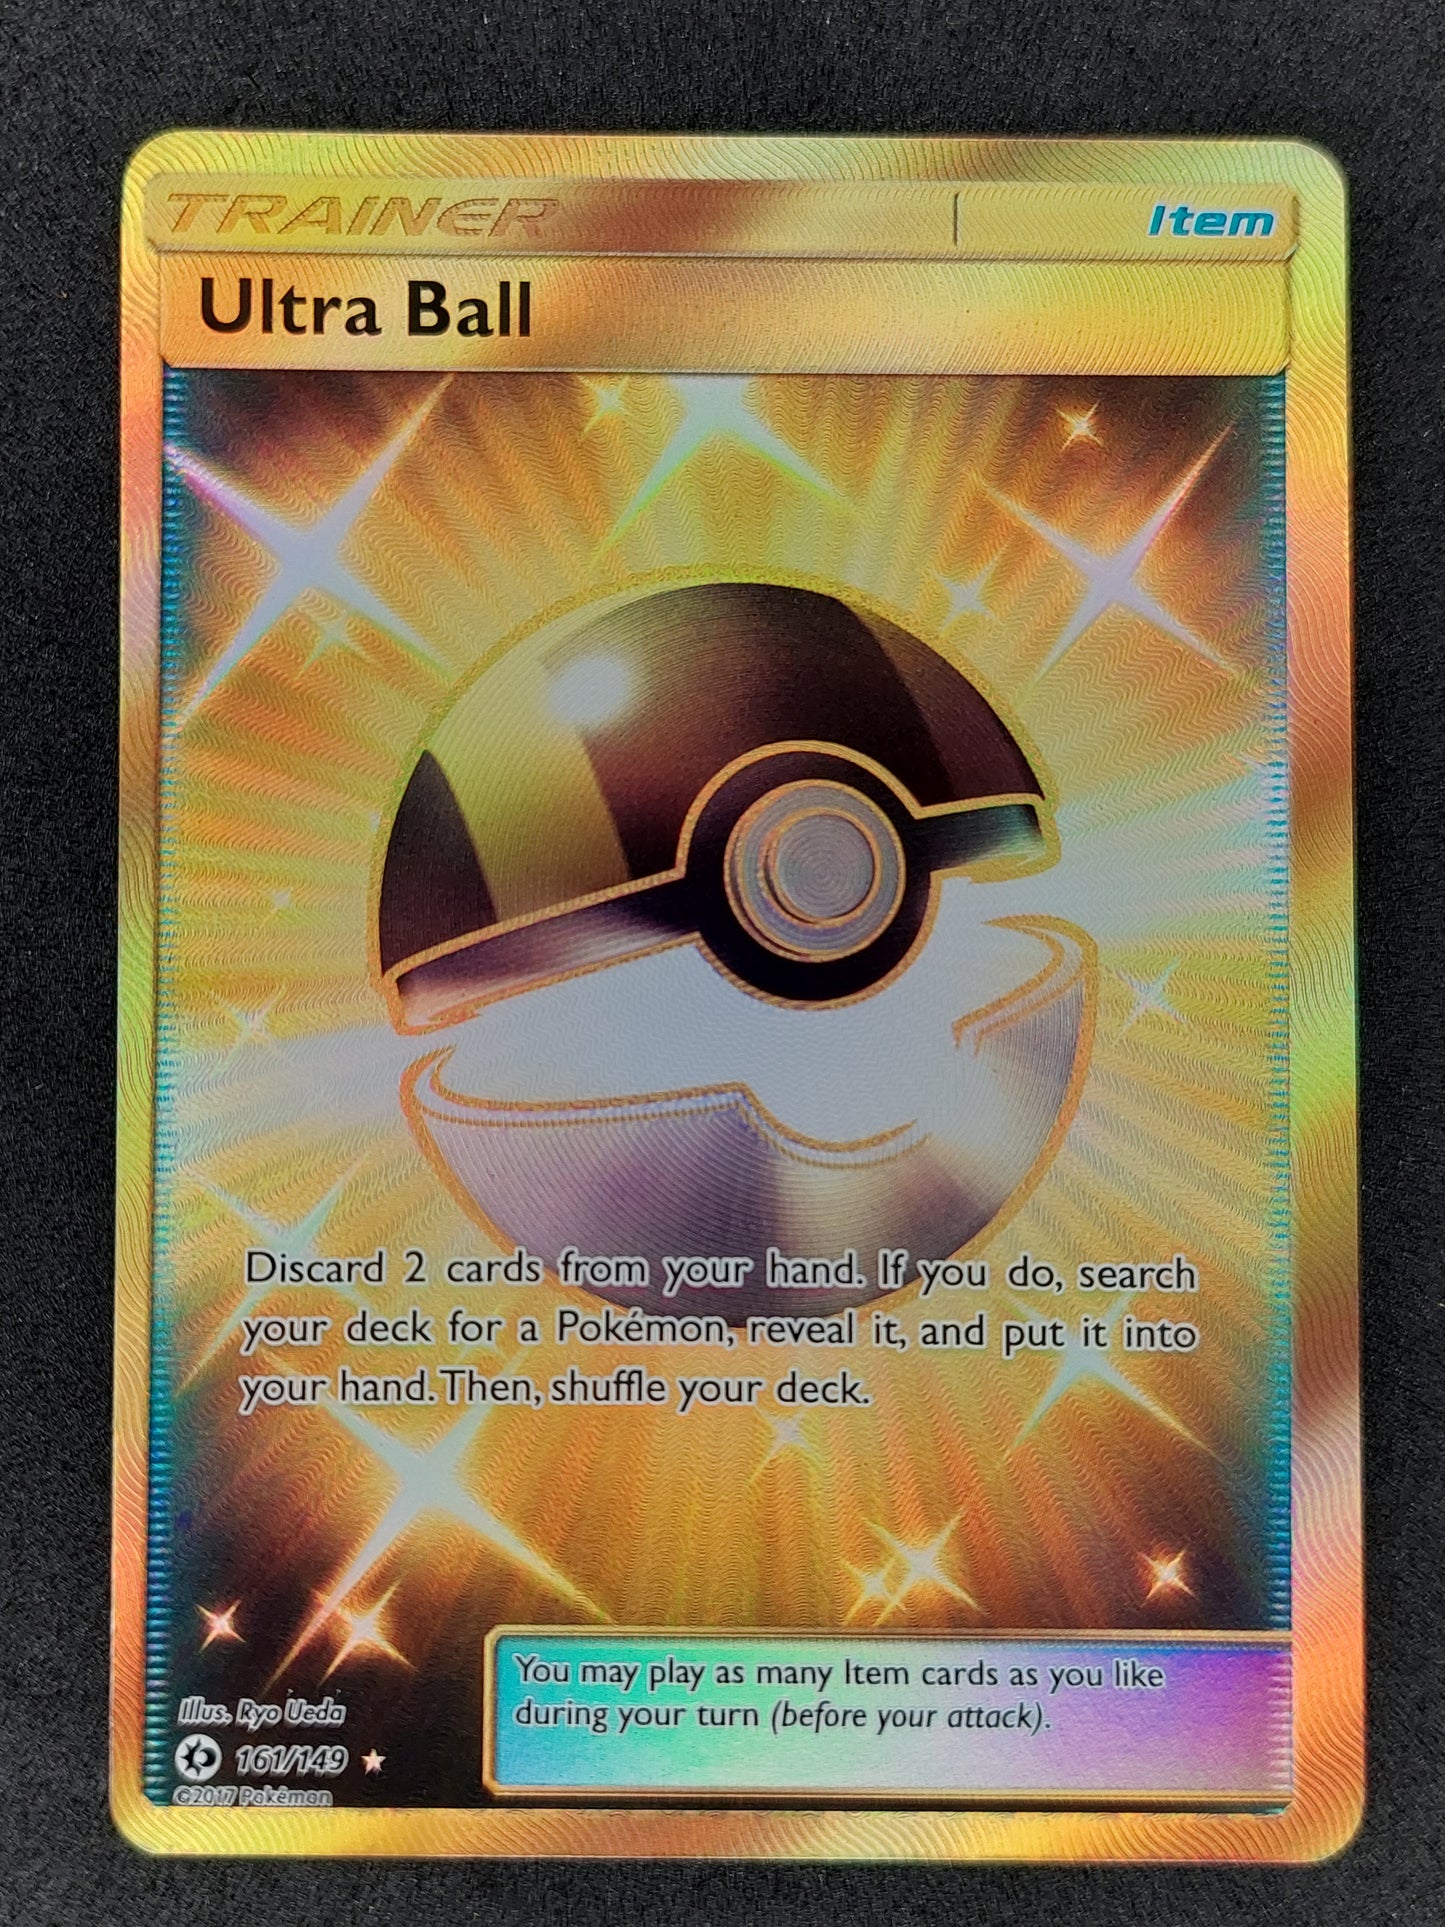 2017 Pokemon Sun & Moon Base 161/149 Trainer Ultra Ball Gold Secret Rare